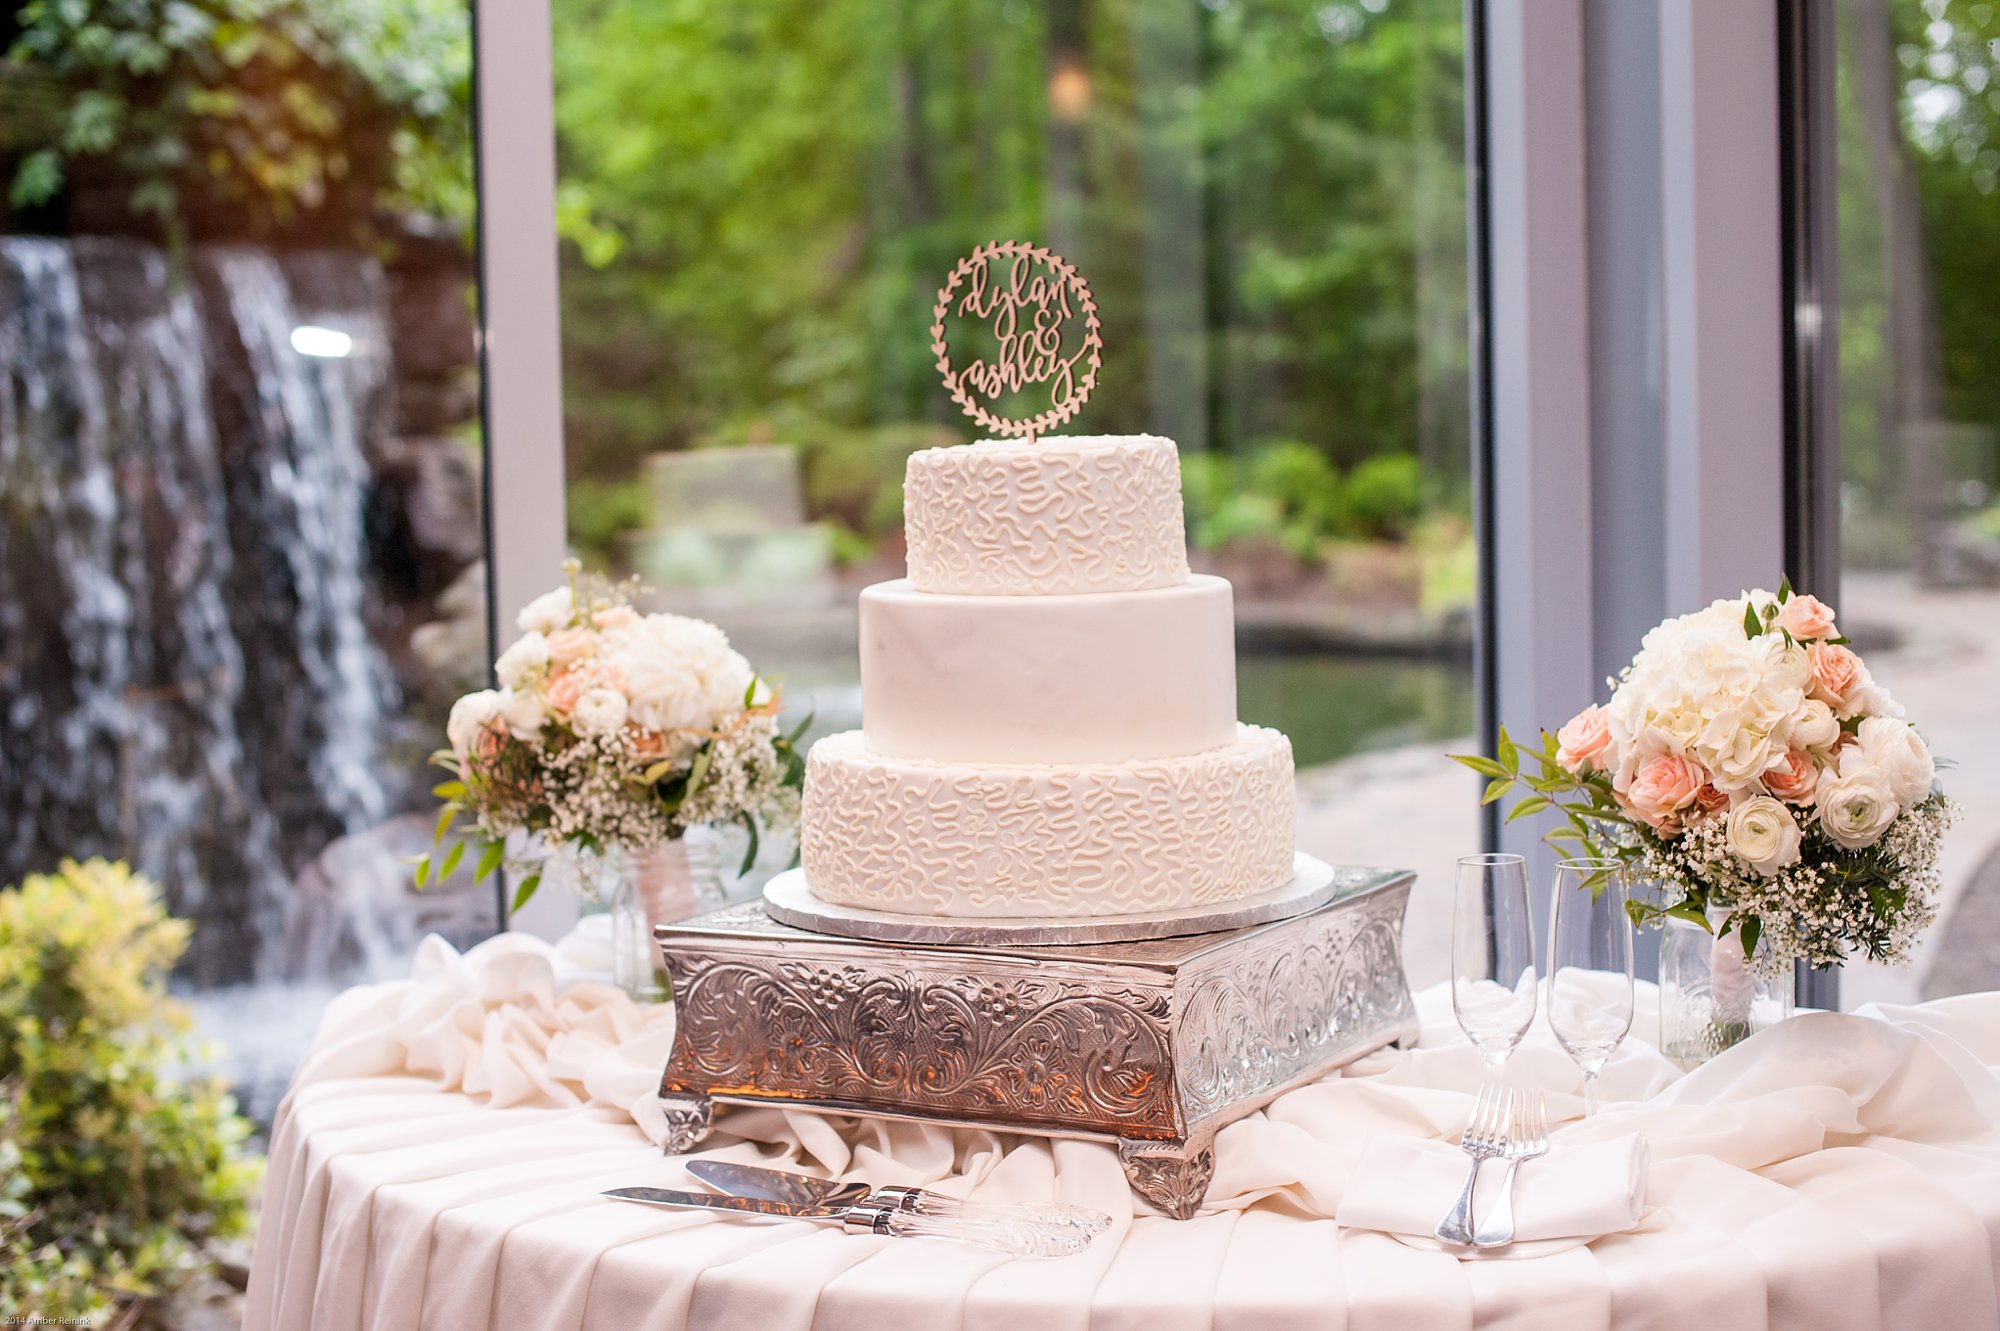 wedding cake with waterfall in background at 2941 restaurant wedding Vienna Virginia